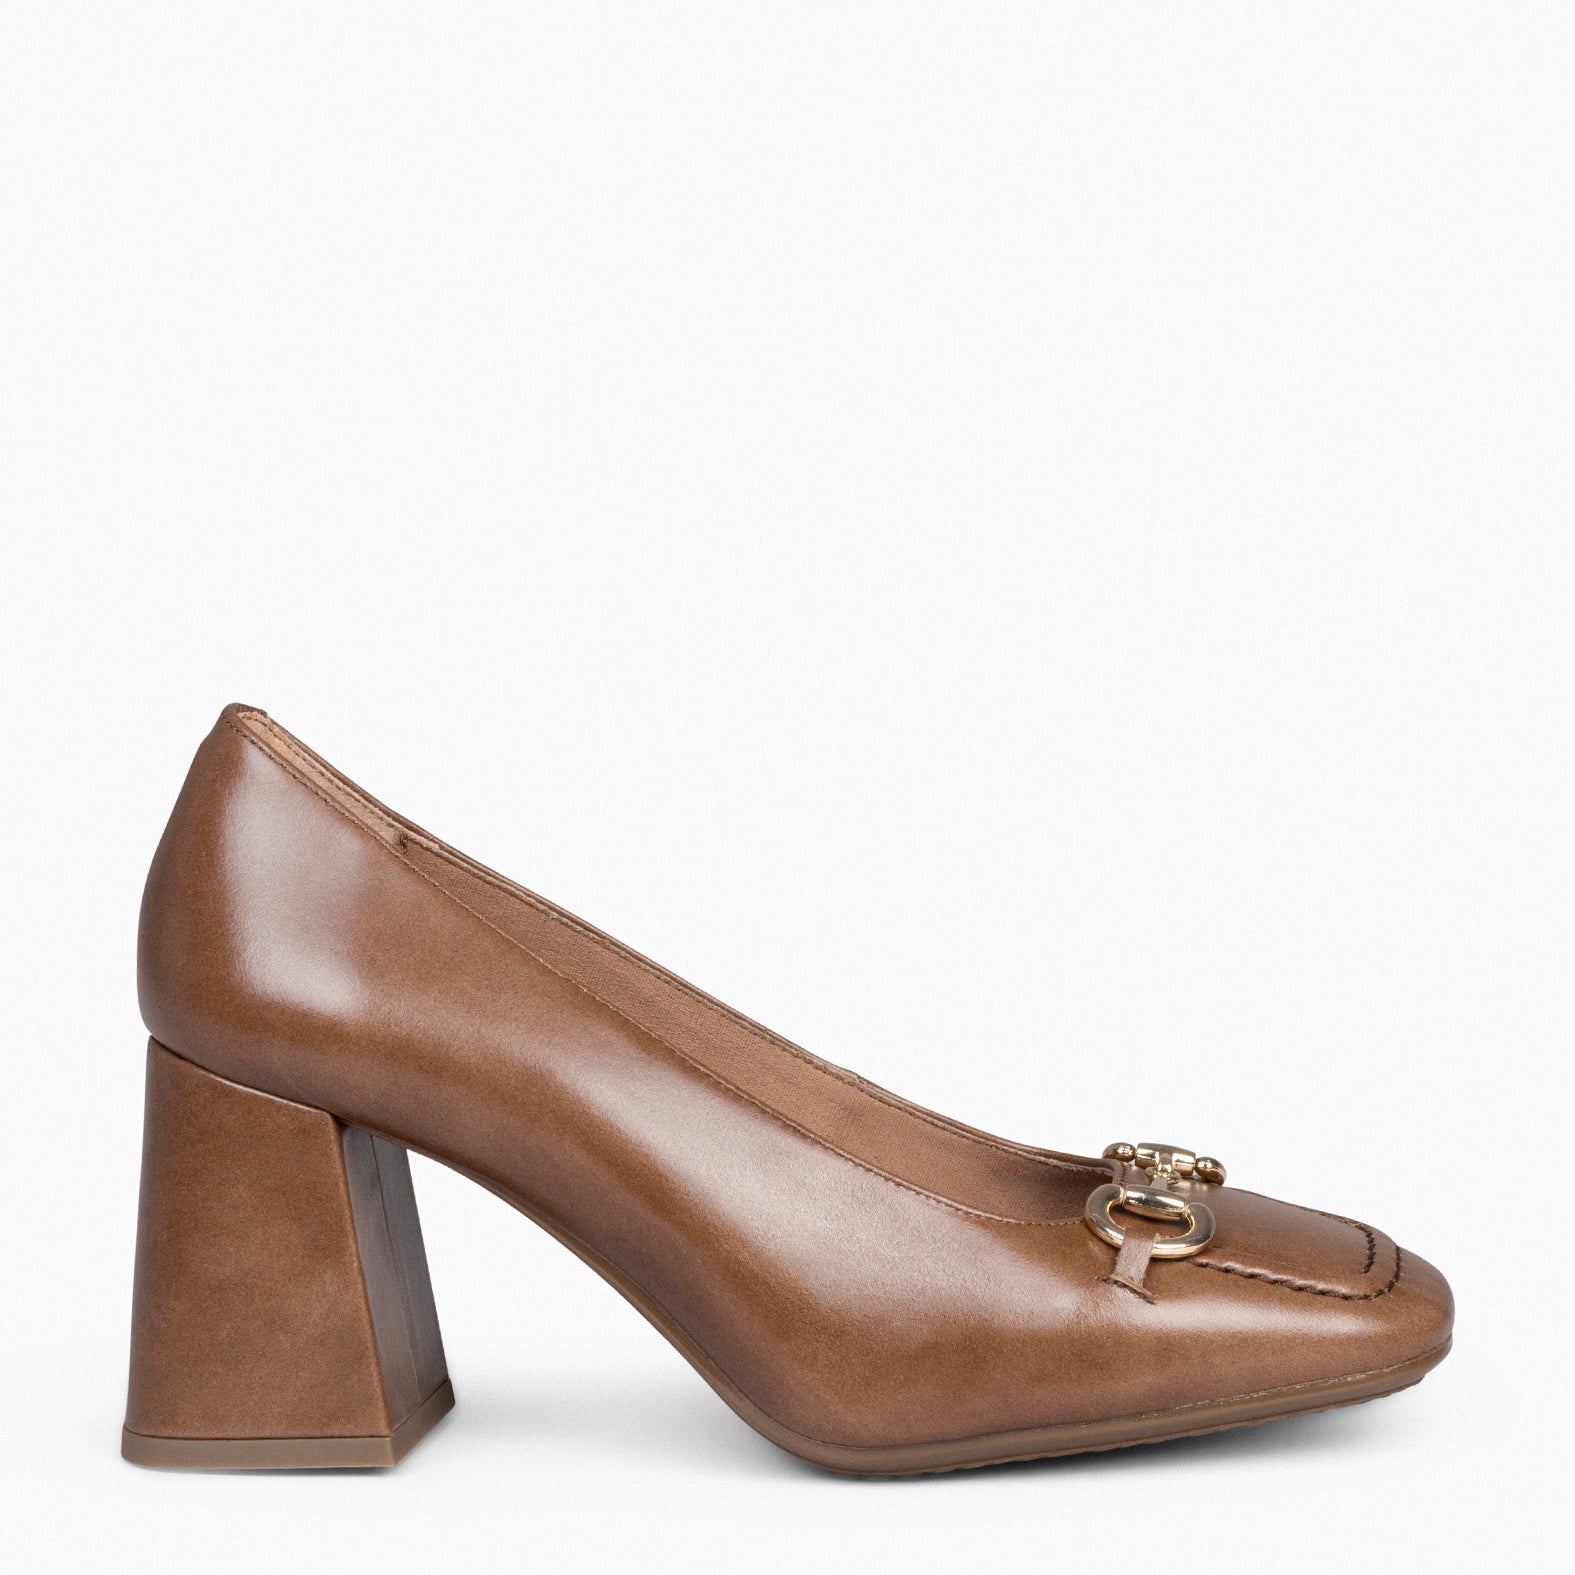 MIA – TAUPE Block heeled shoes